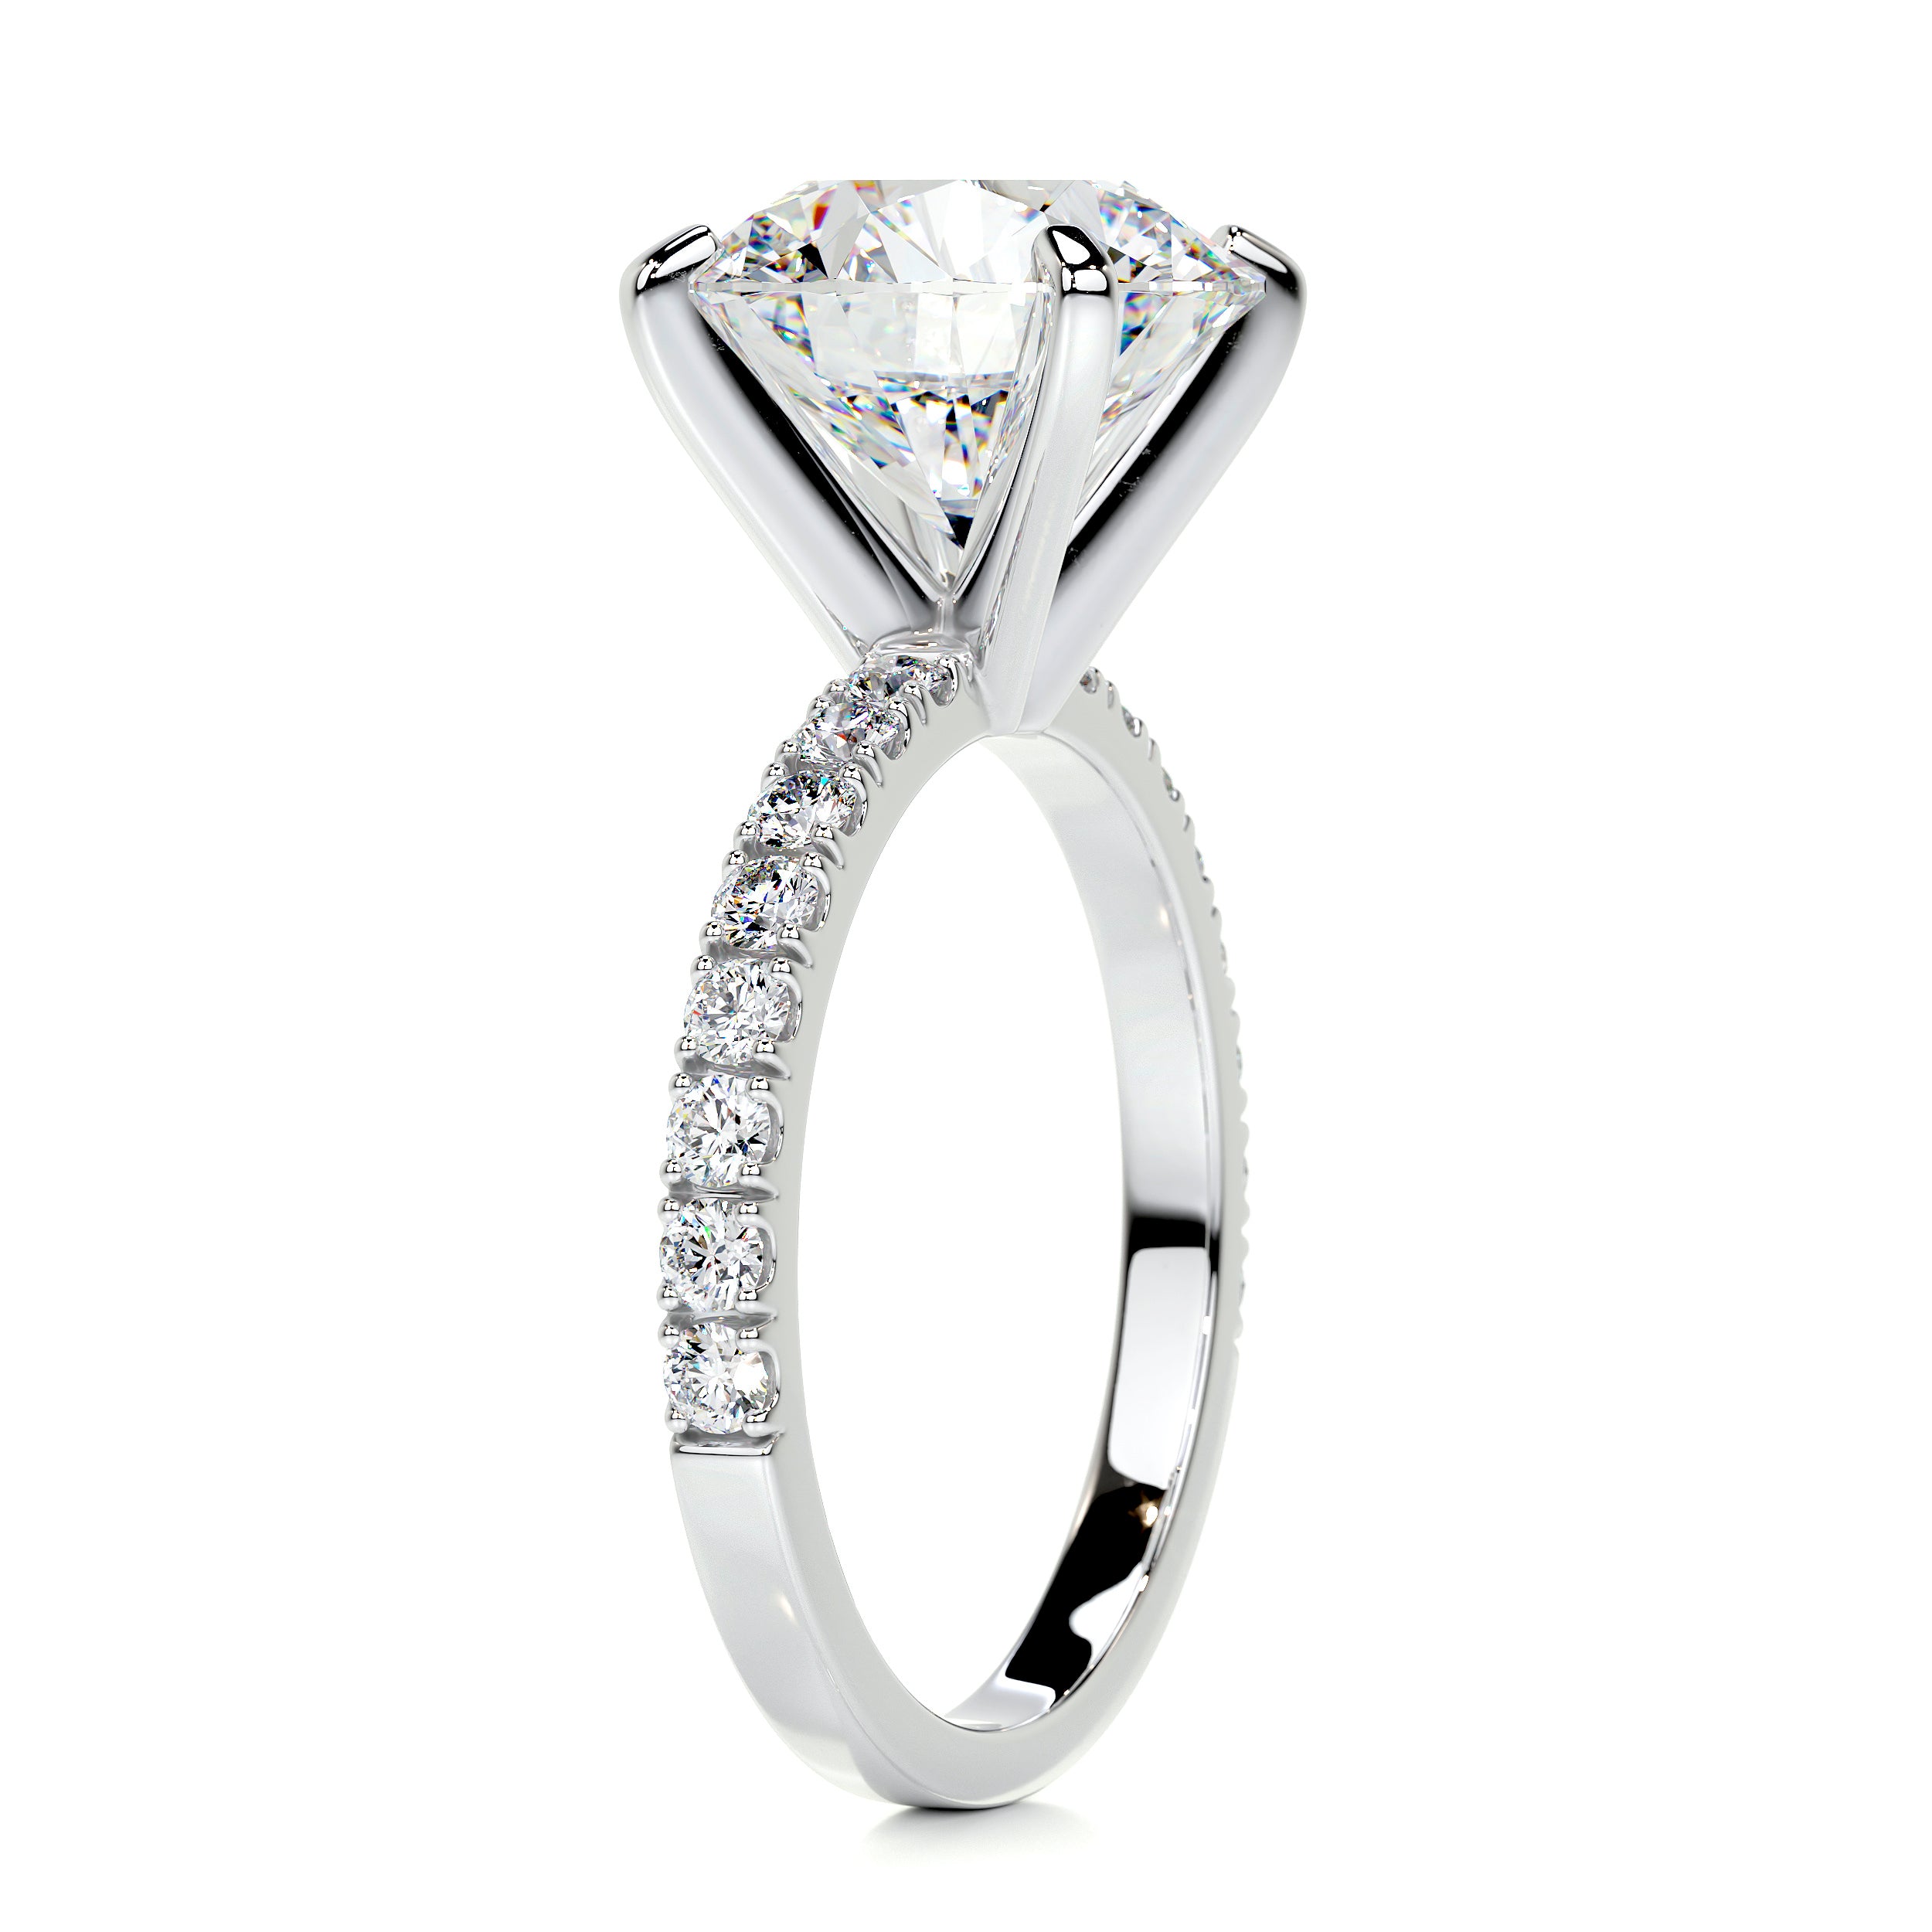 Alison Moissanite & Diamonds Ring   (5.5 Carat) -14K White Gold